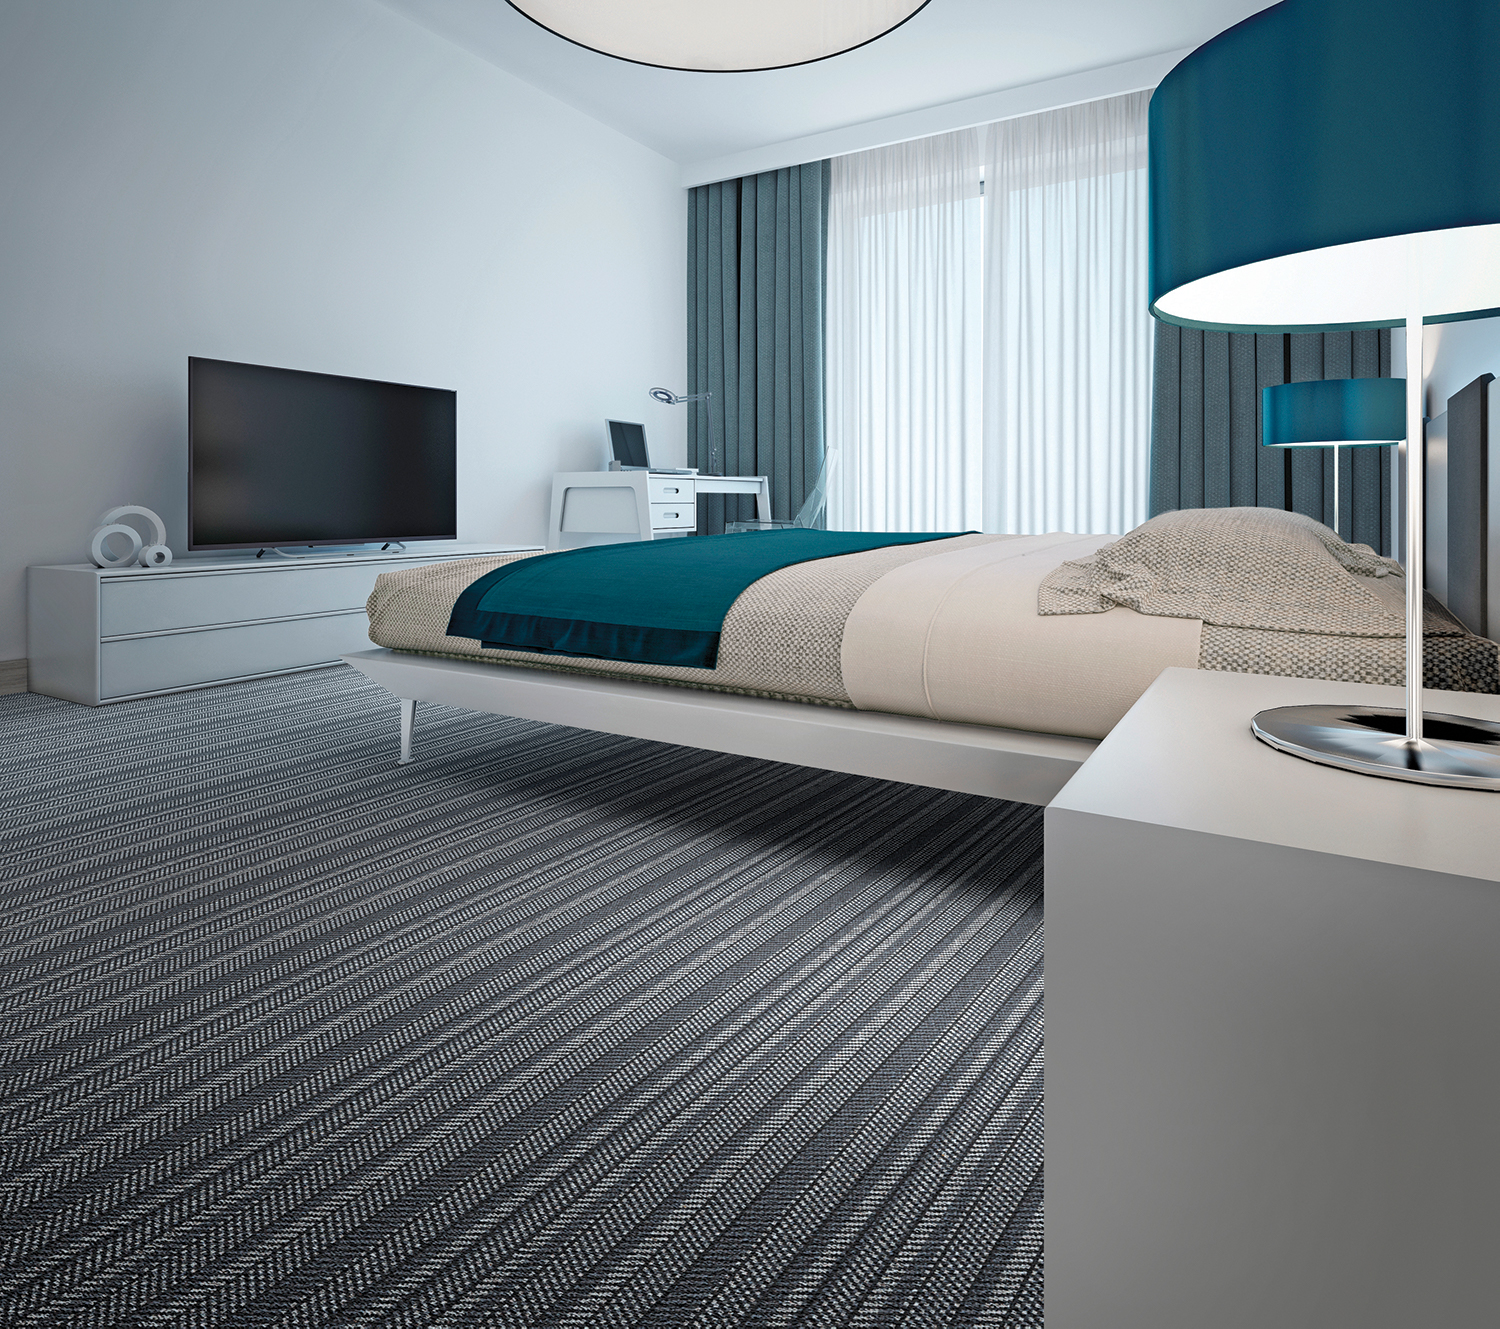 Lindisfarne herringbone tufted carpet installed in a modern, minimalist hotel room.